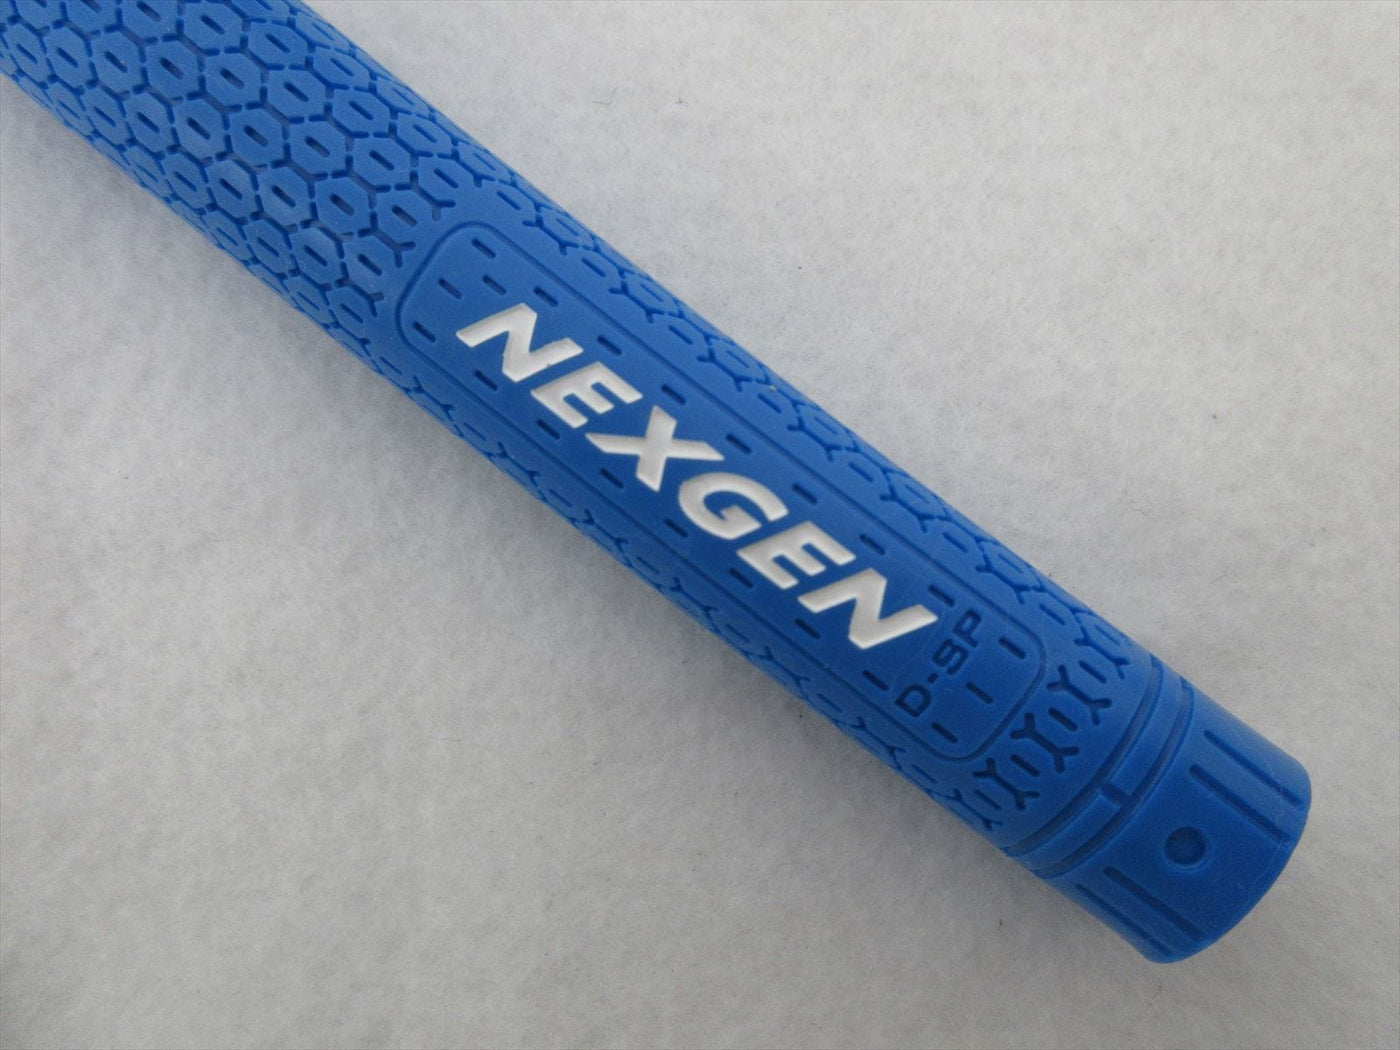 nexgen d spec grip blue 5 20 pieces collaborated with elite grips